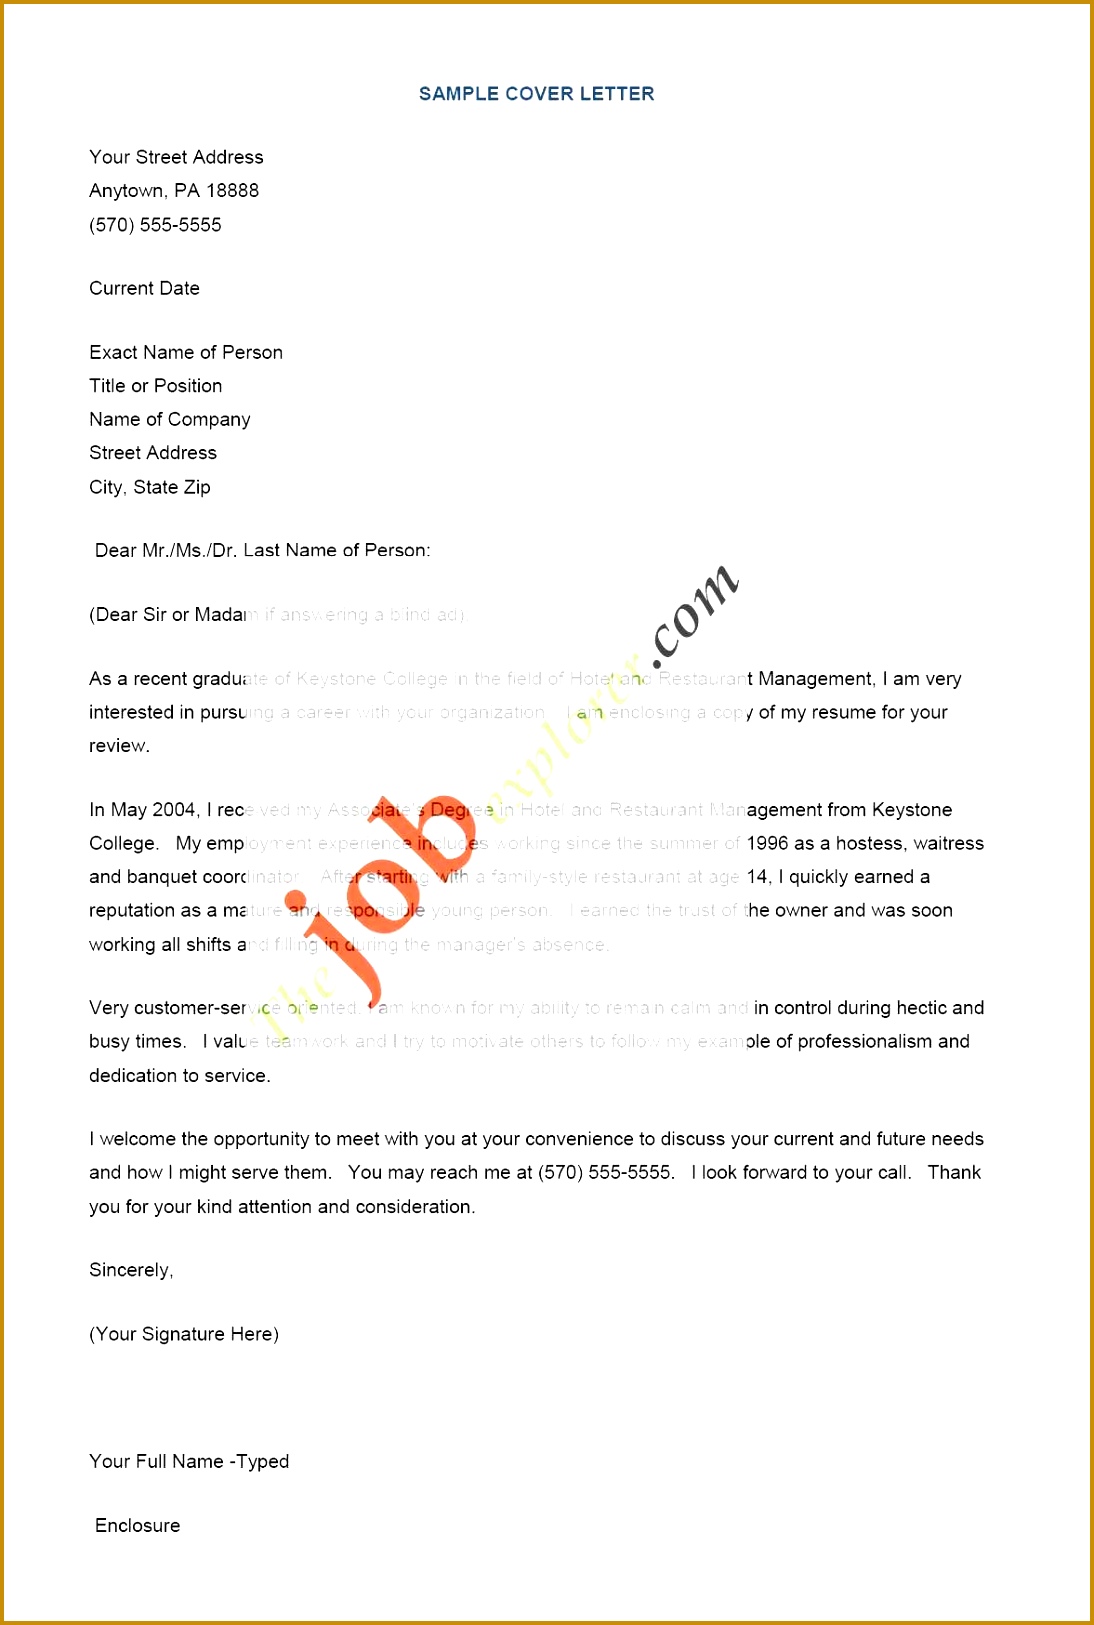 Best Cover Letter Template Lovely Best Cover Letter Lovely formatted Resume 0d Professional Resume Best 16251094